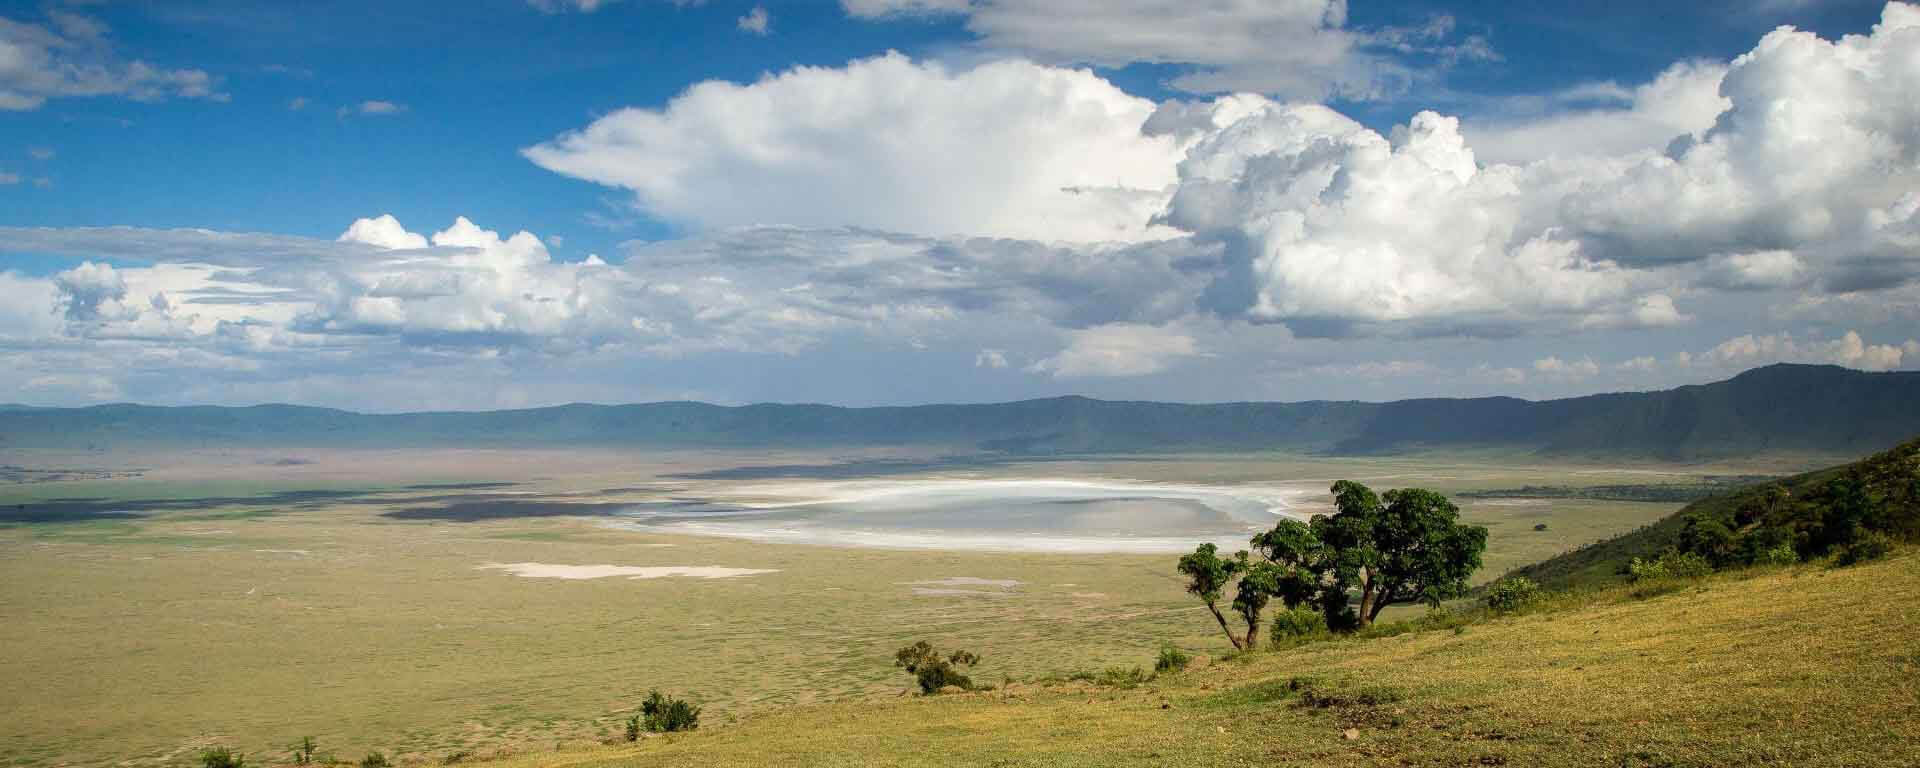 Ngorongoro Tour Packages